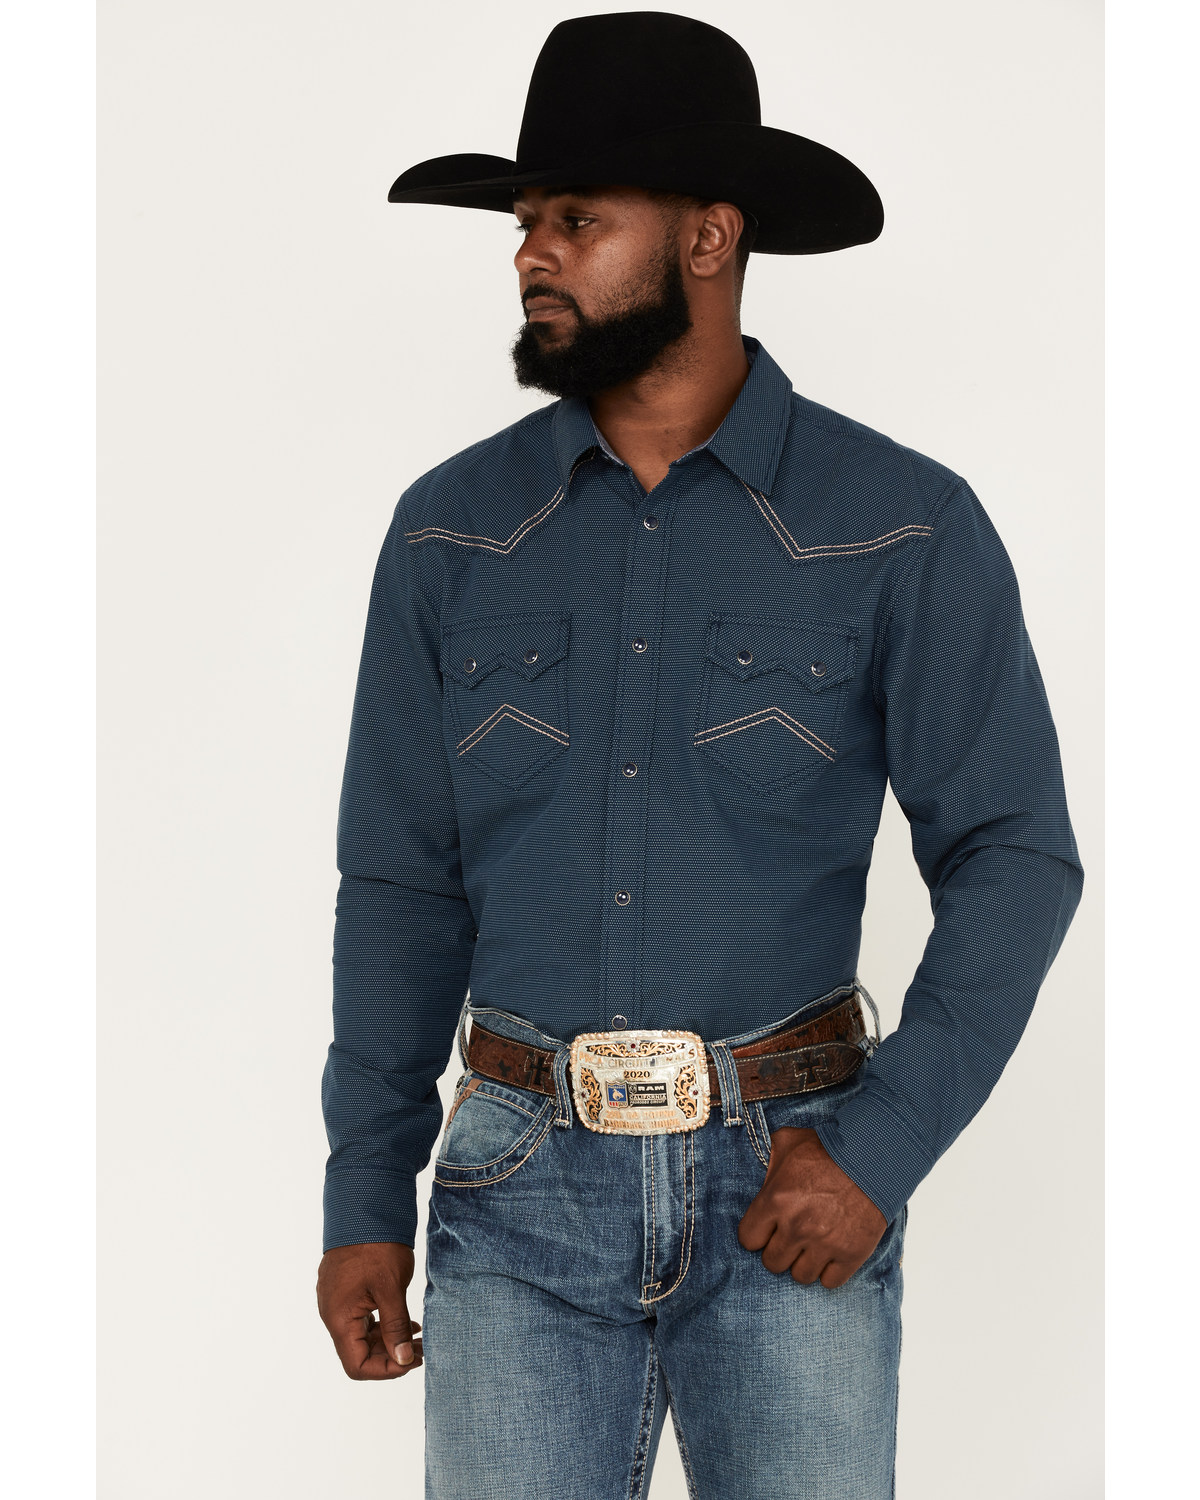 Cody James Men's Endurance Solid Stitched Yoke Long Sleeve Snap Western Shirt